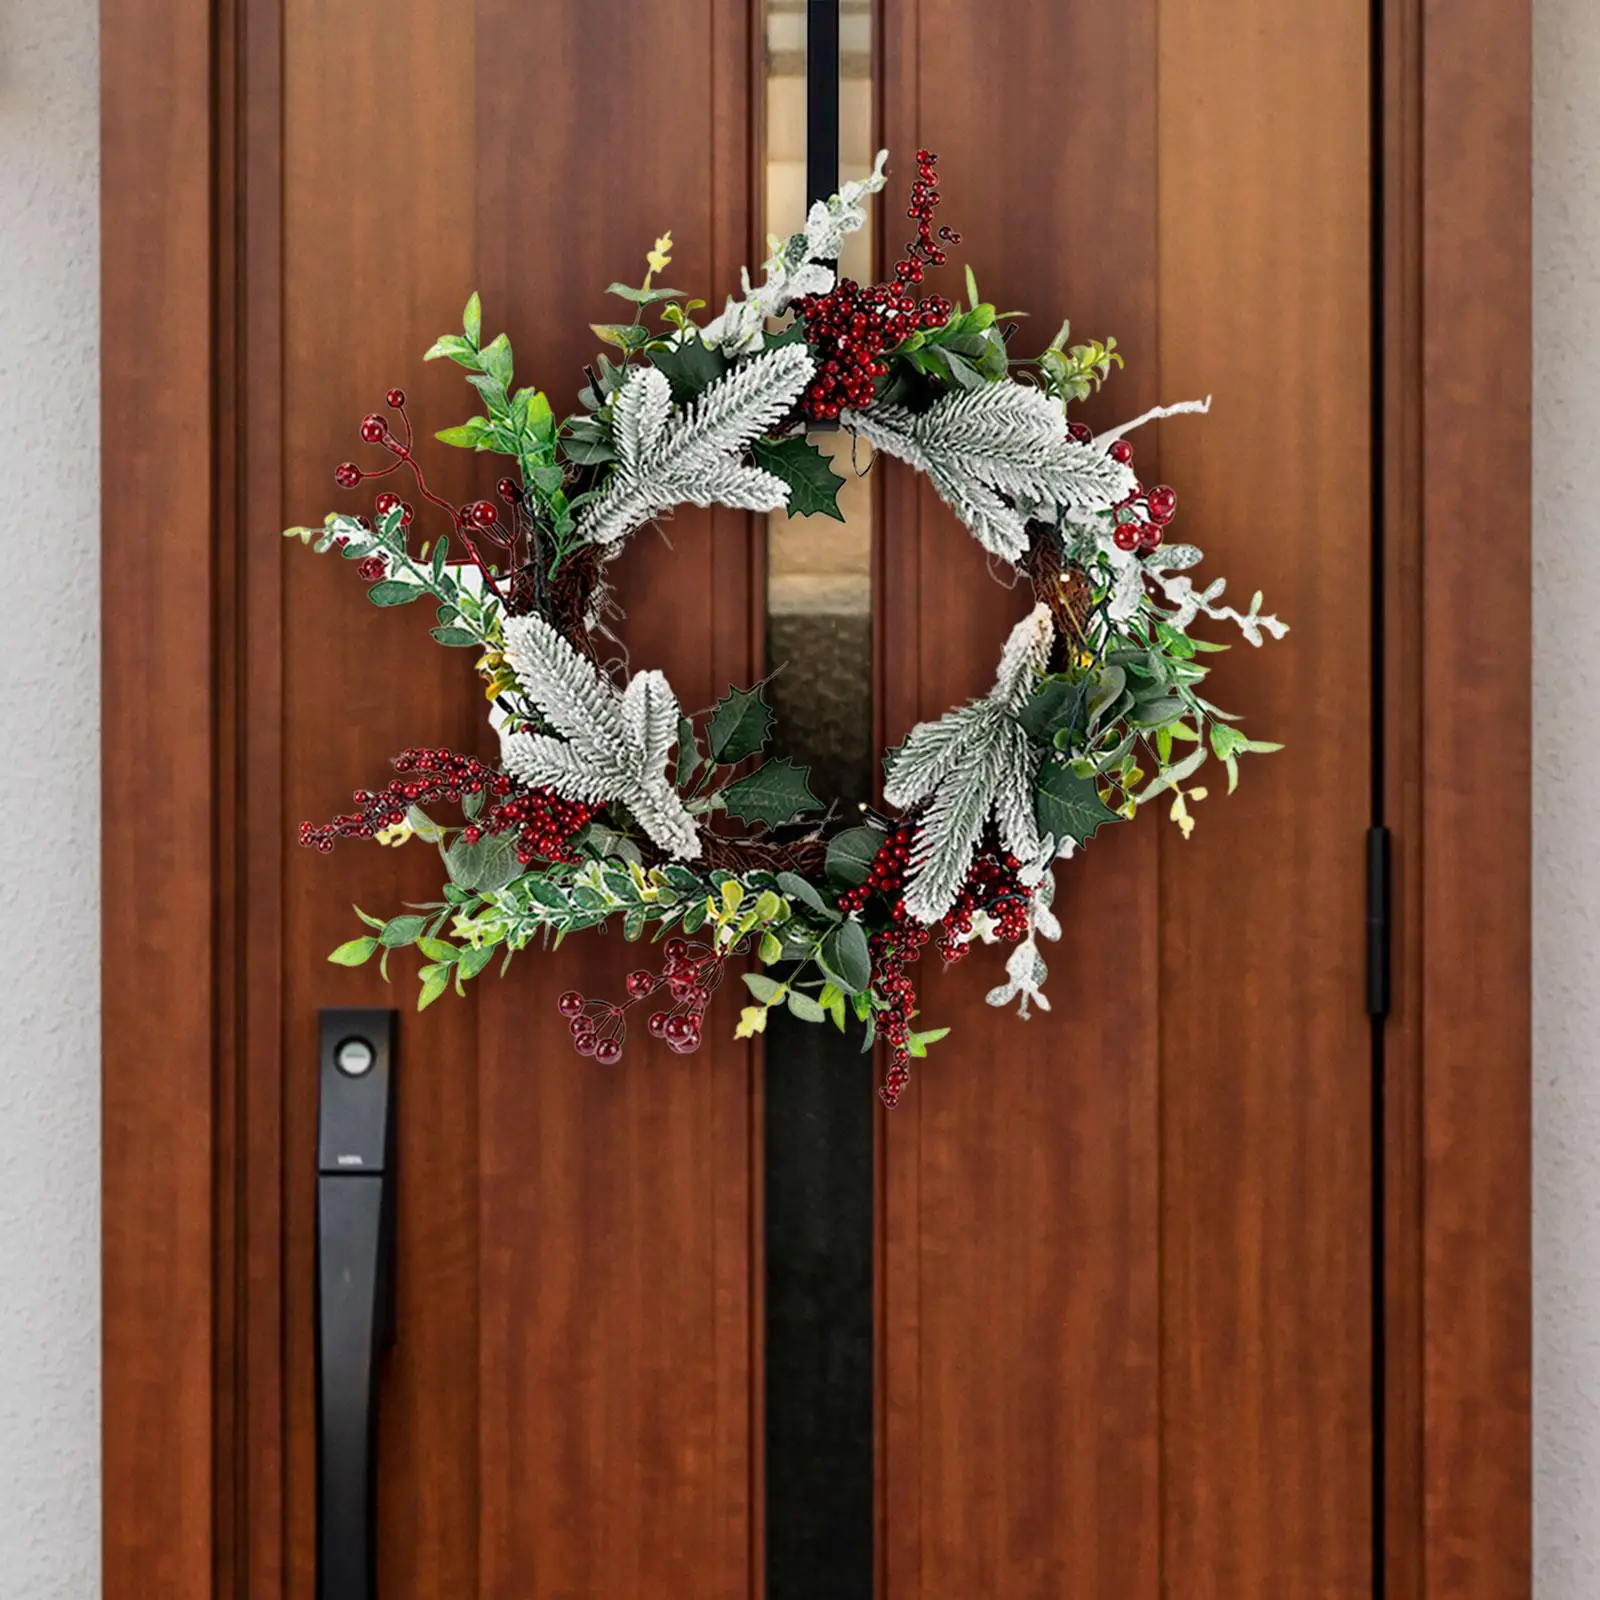 Christmas Wreath 45cm Artificial Handcrafted Door Wreath Christmas Garland for Festival Outdoor Indoor Wedding Dining Room